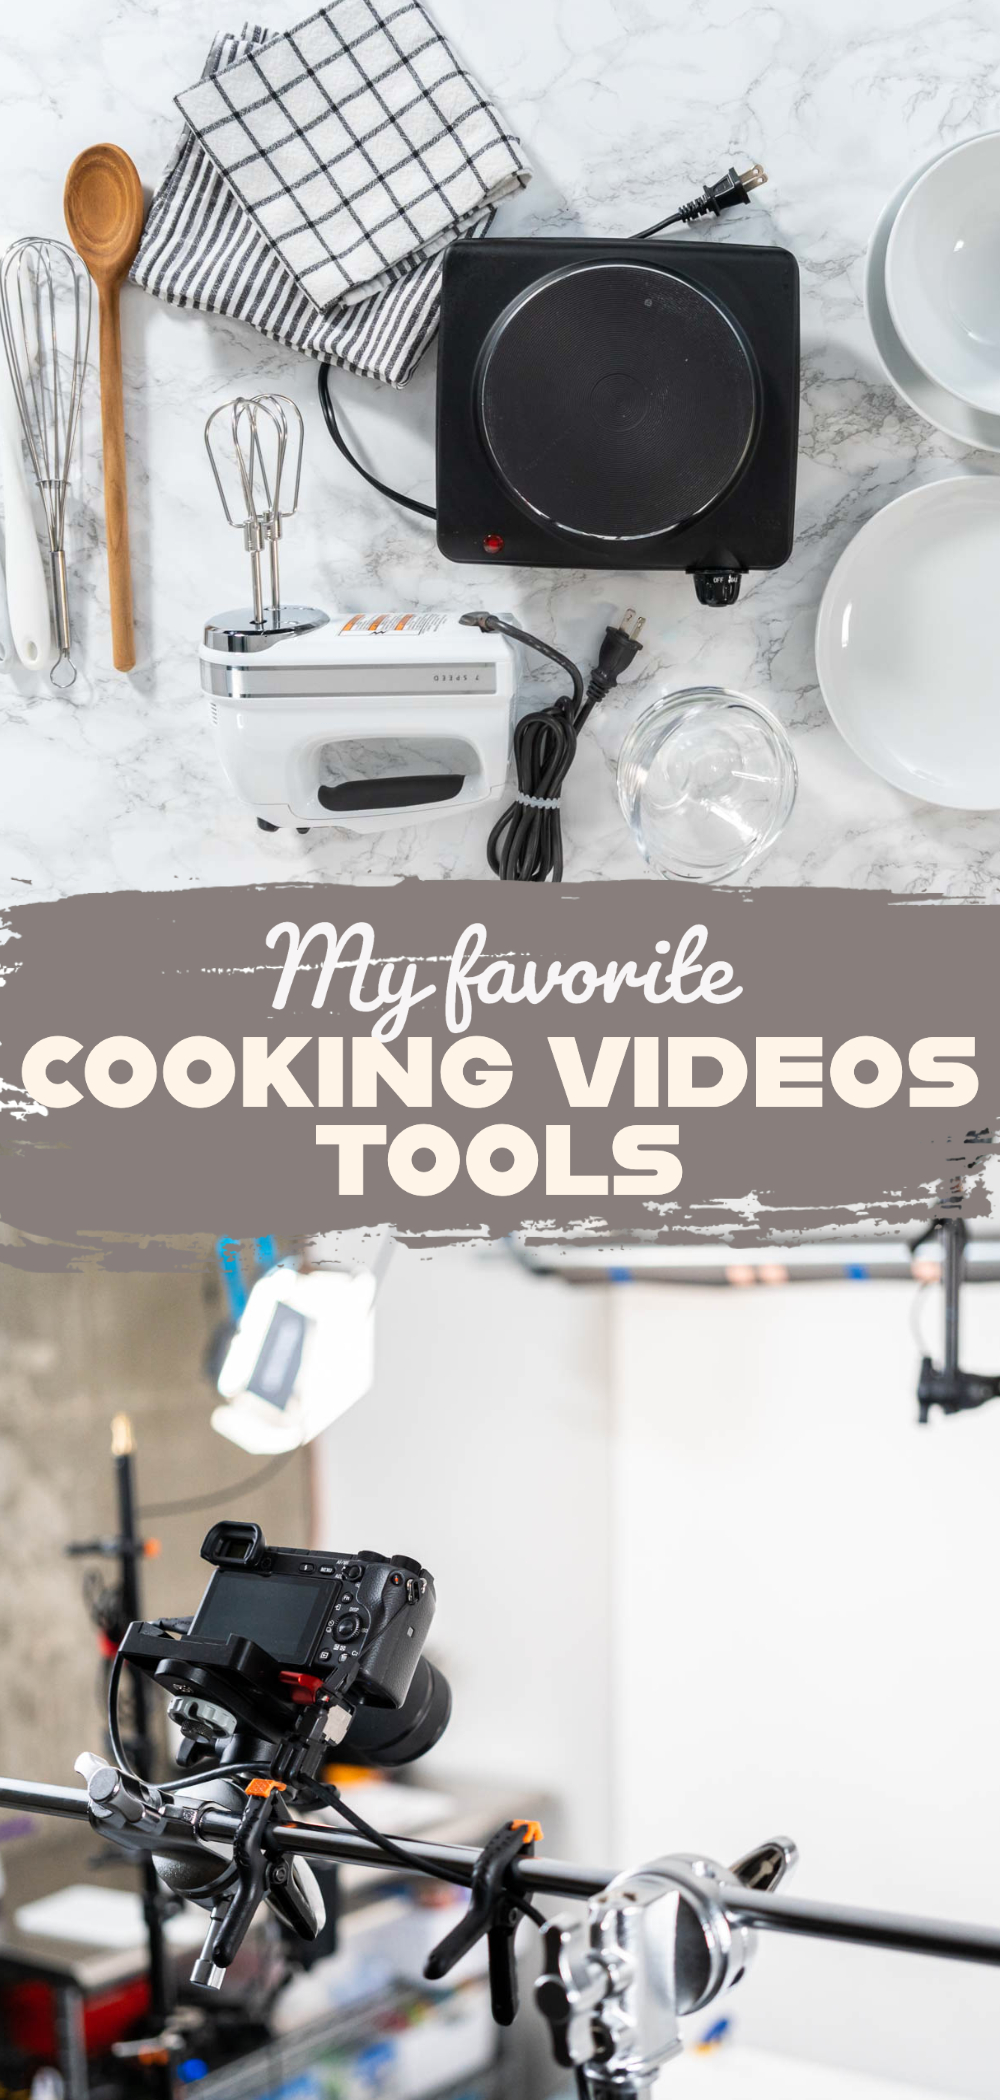 My favorite cooking videos tools